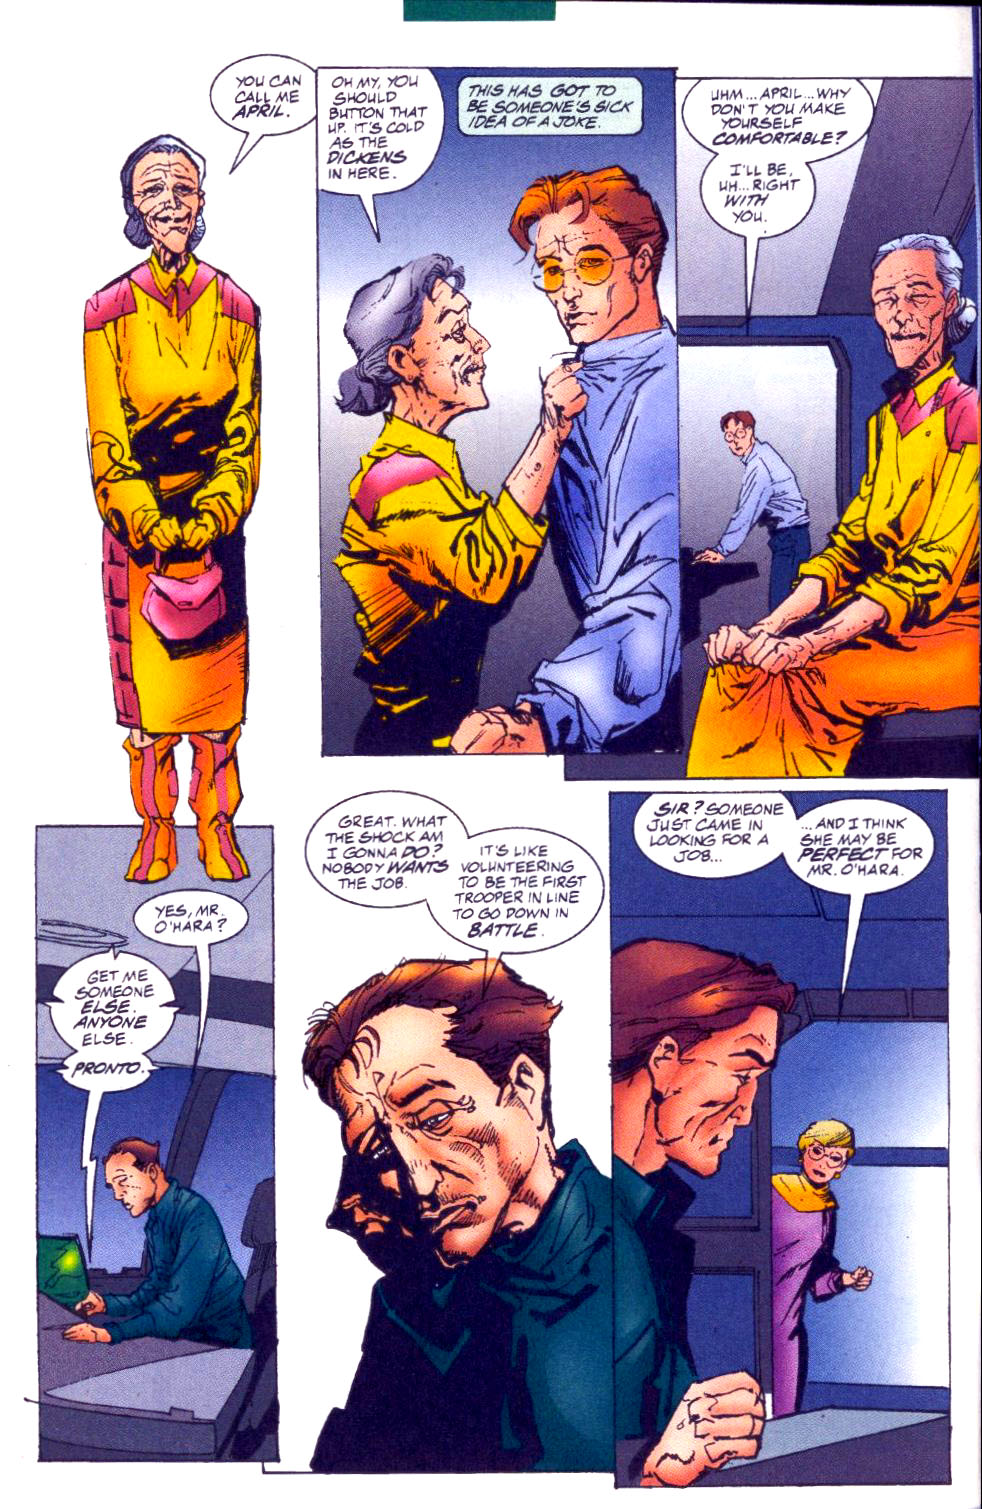 Spider-Man 2099 (1992) issue 42 - Page 5